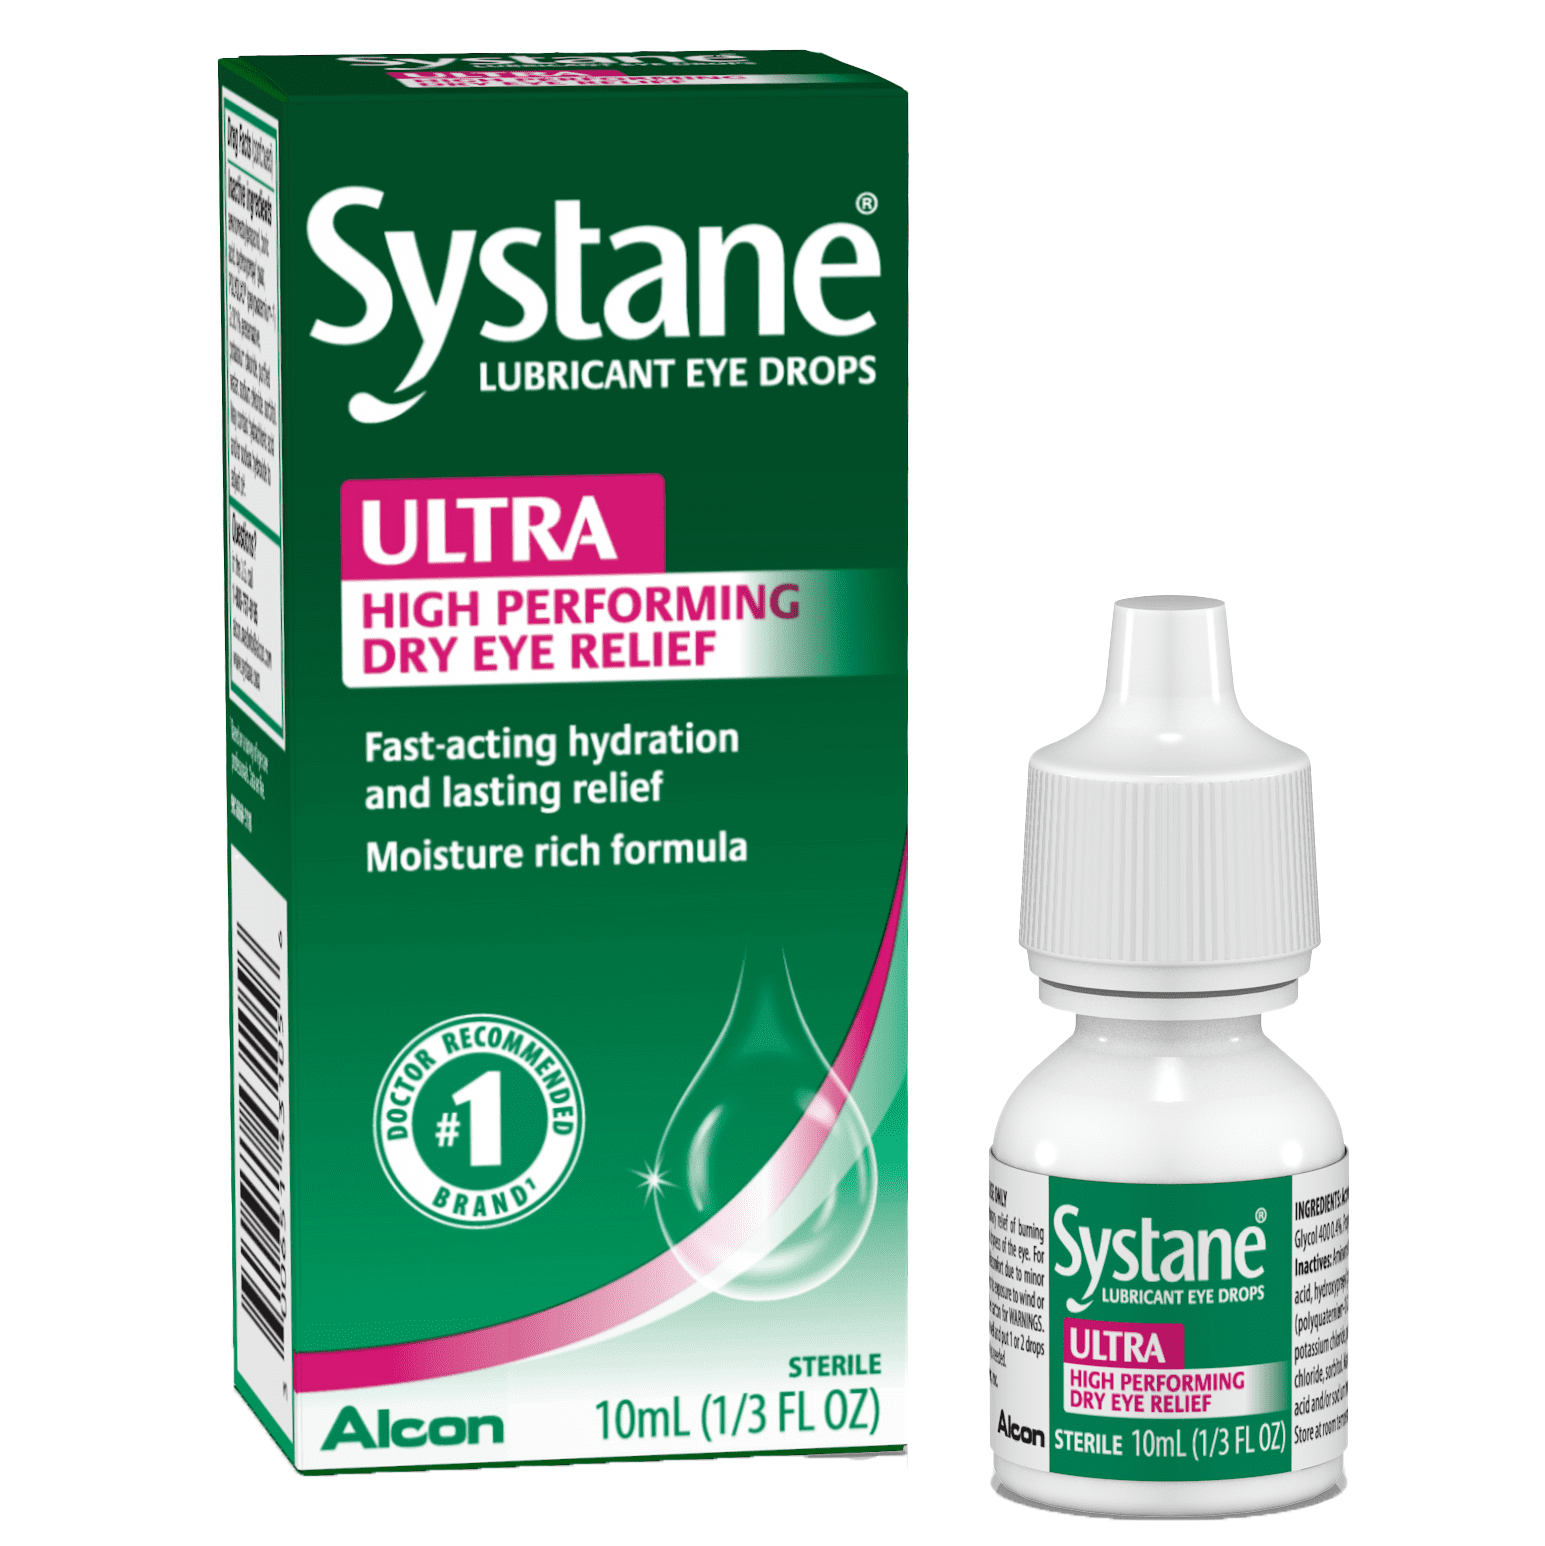 Systane Ultra Lubricant Eye Drops | lupon.gov.ph